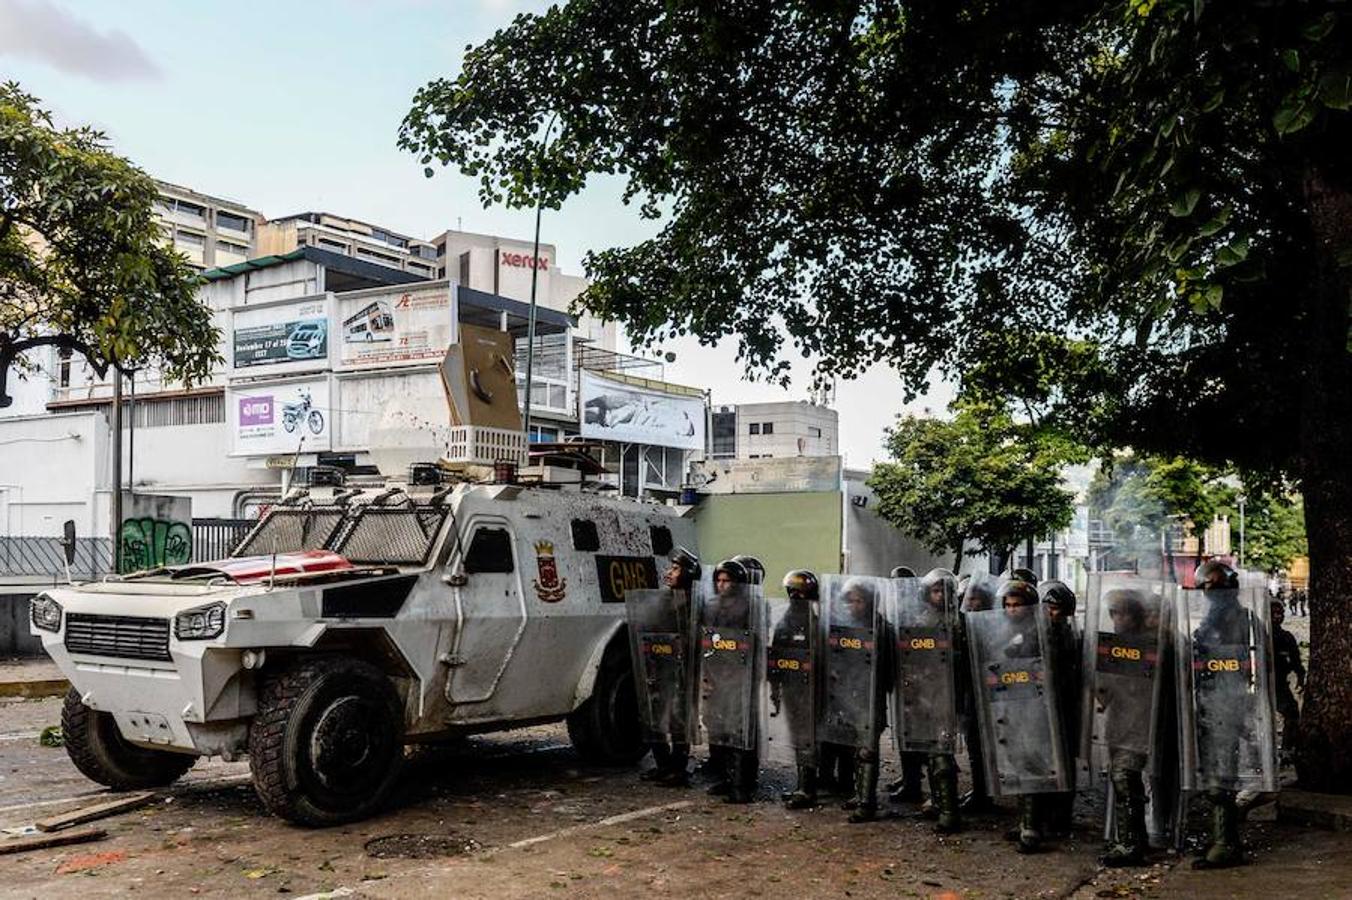 http://www.abc.es/media/MM/2017/07/27/huelga-general-venezuela34-U10109771206xc--1352x900@abc.jpg